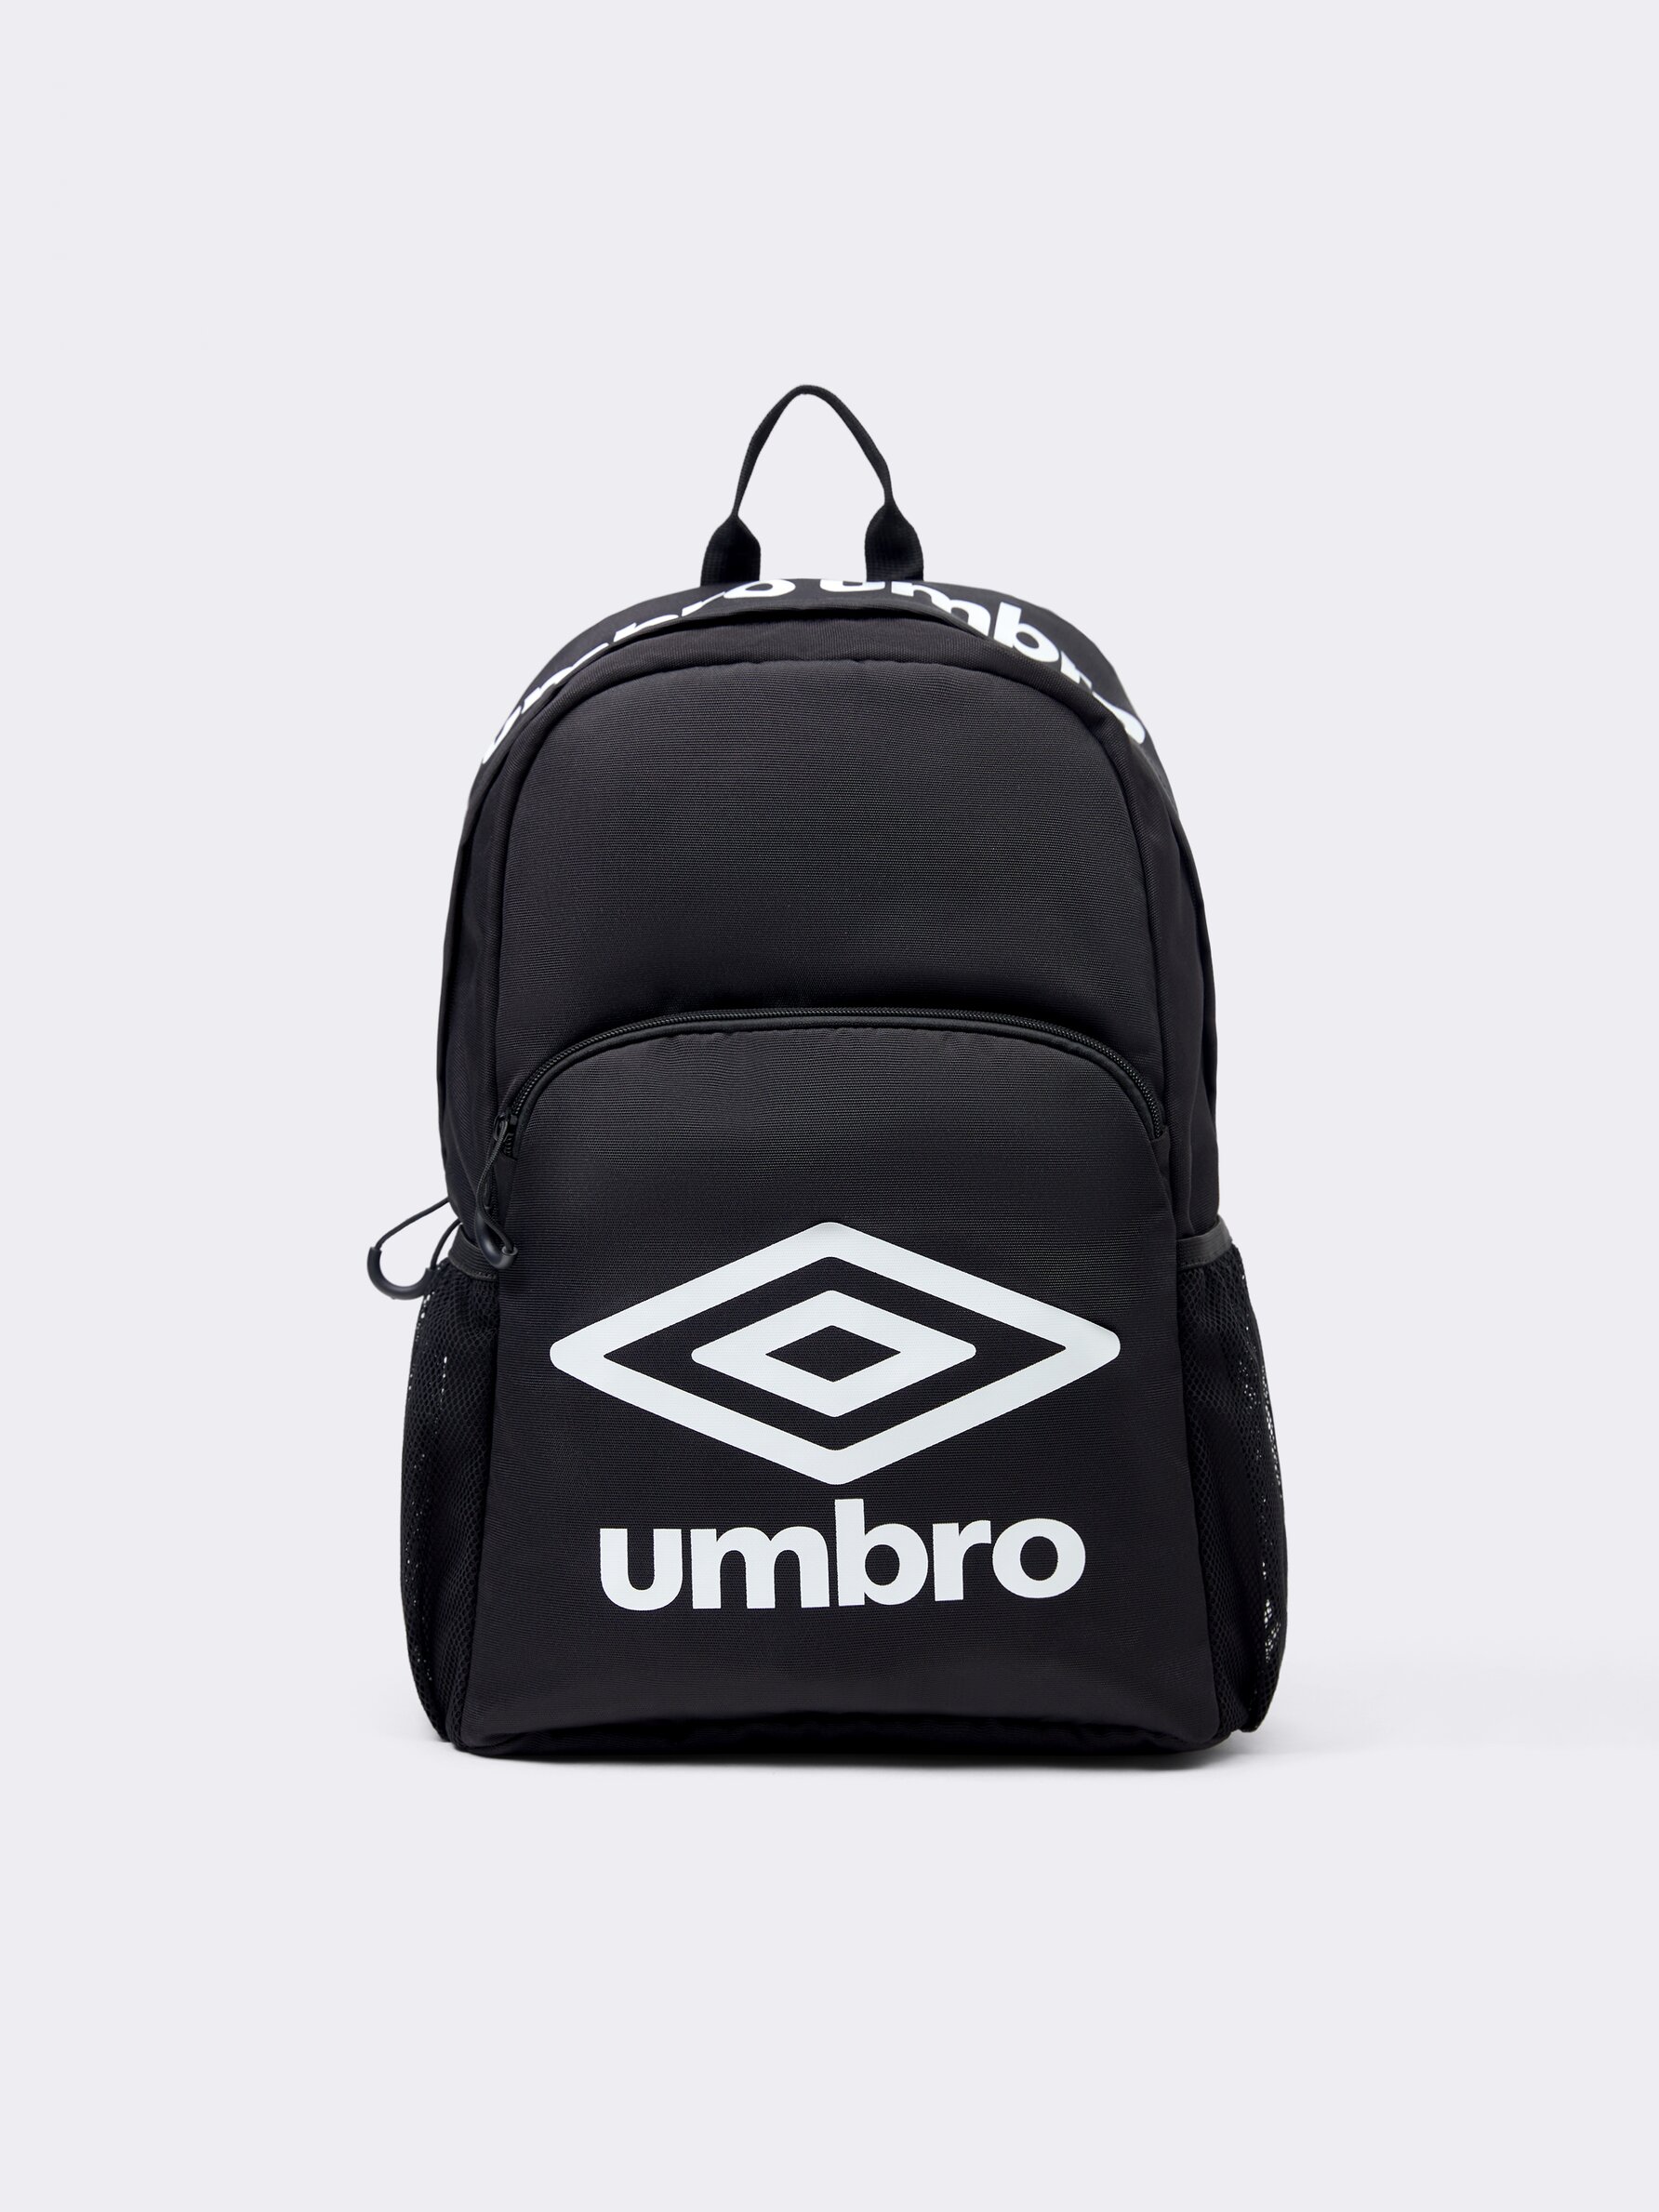 Amazon.com: Umbro Sacoche Bag, Navy : Sports & Outdoors